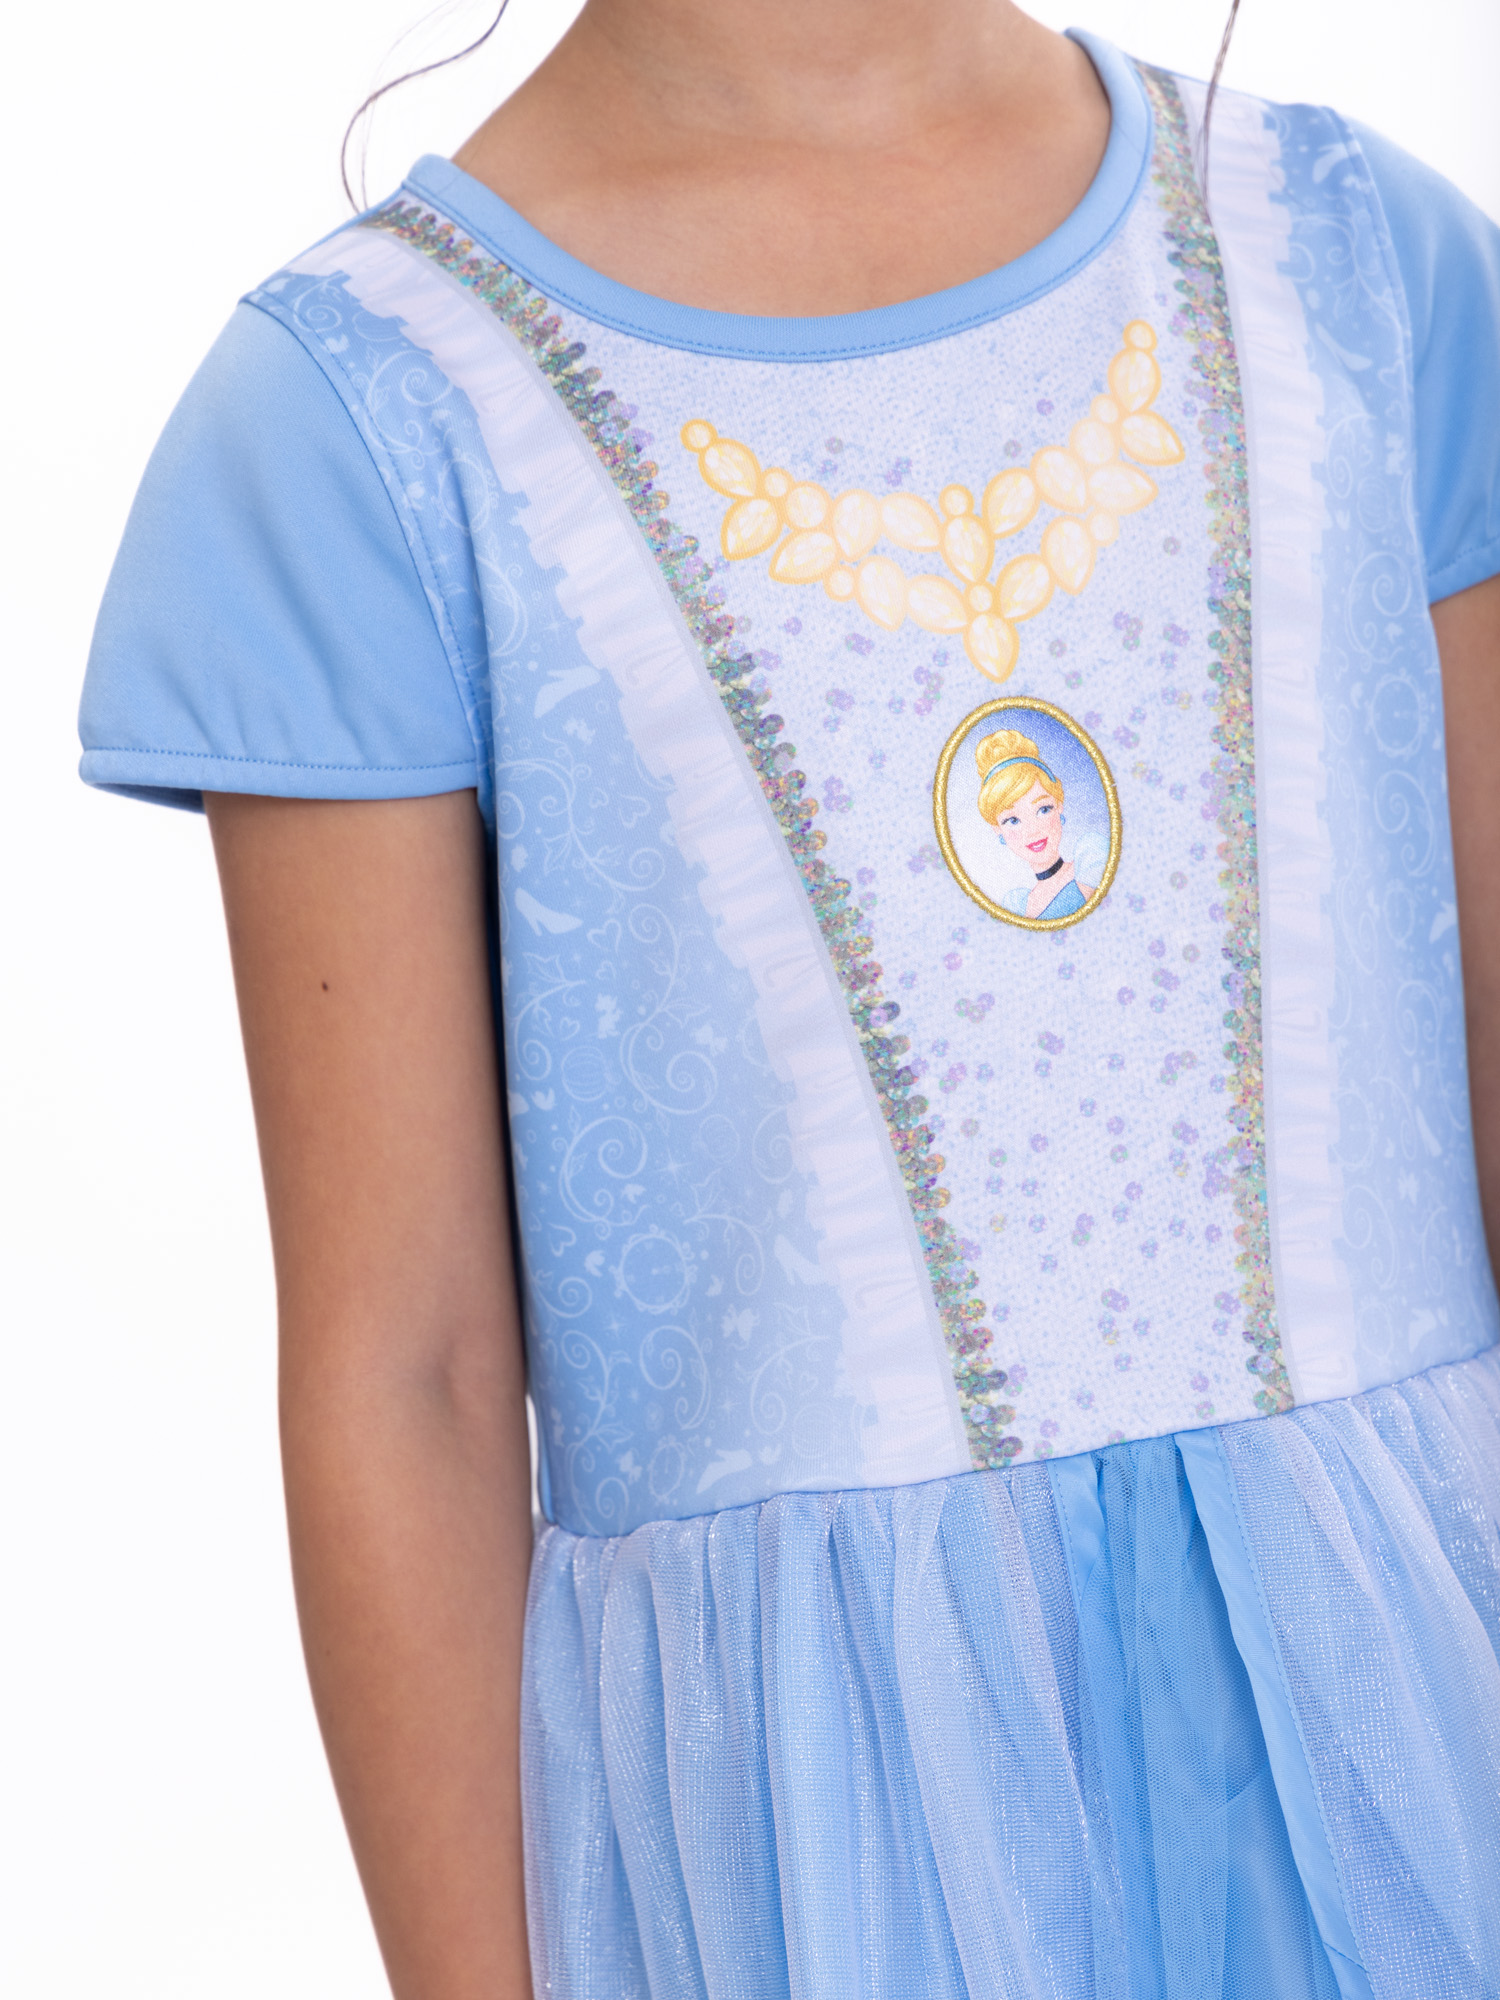 Disney Princess Girls Cinderella Cosplay Dress, Sizes 4-16 - image 5 of 14